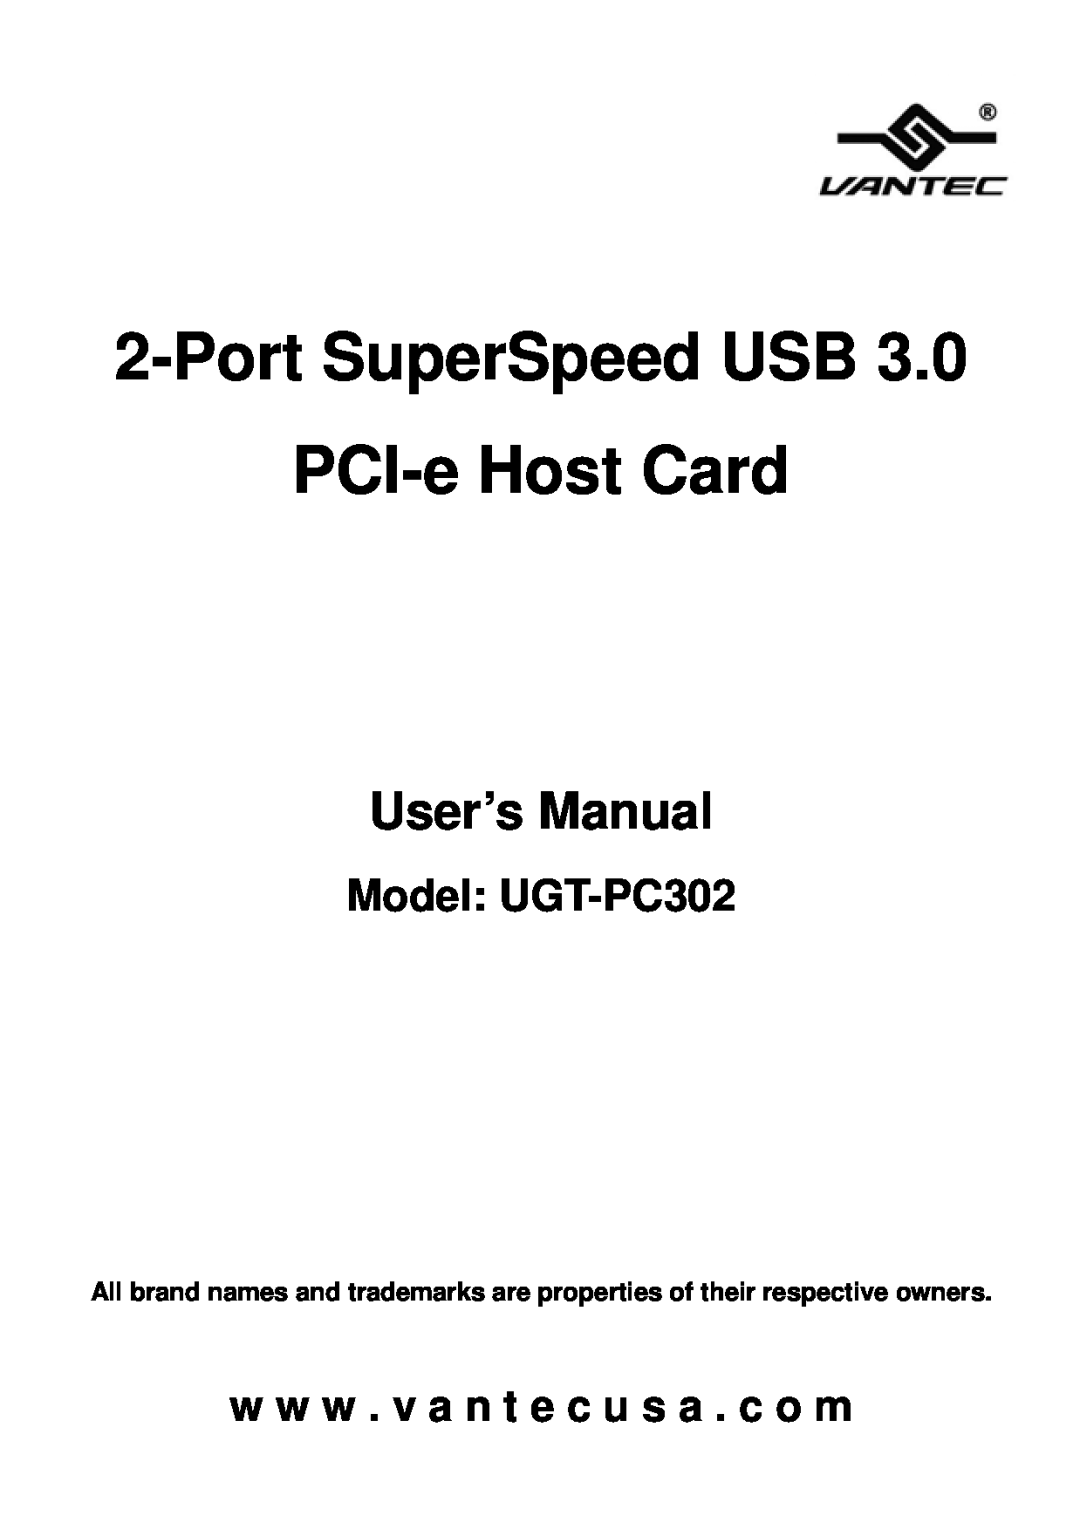 Vantec user manual Port SuperSpeed USB PCI-e Host Card, User’s Manual, Model UGT-PC302 